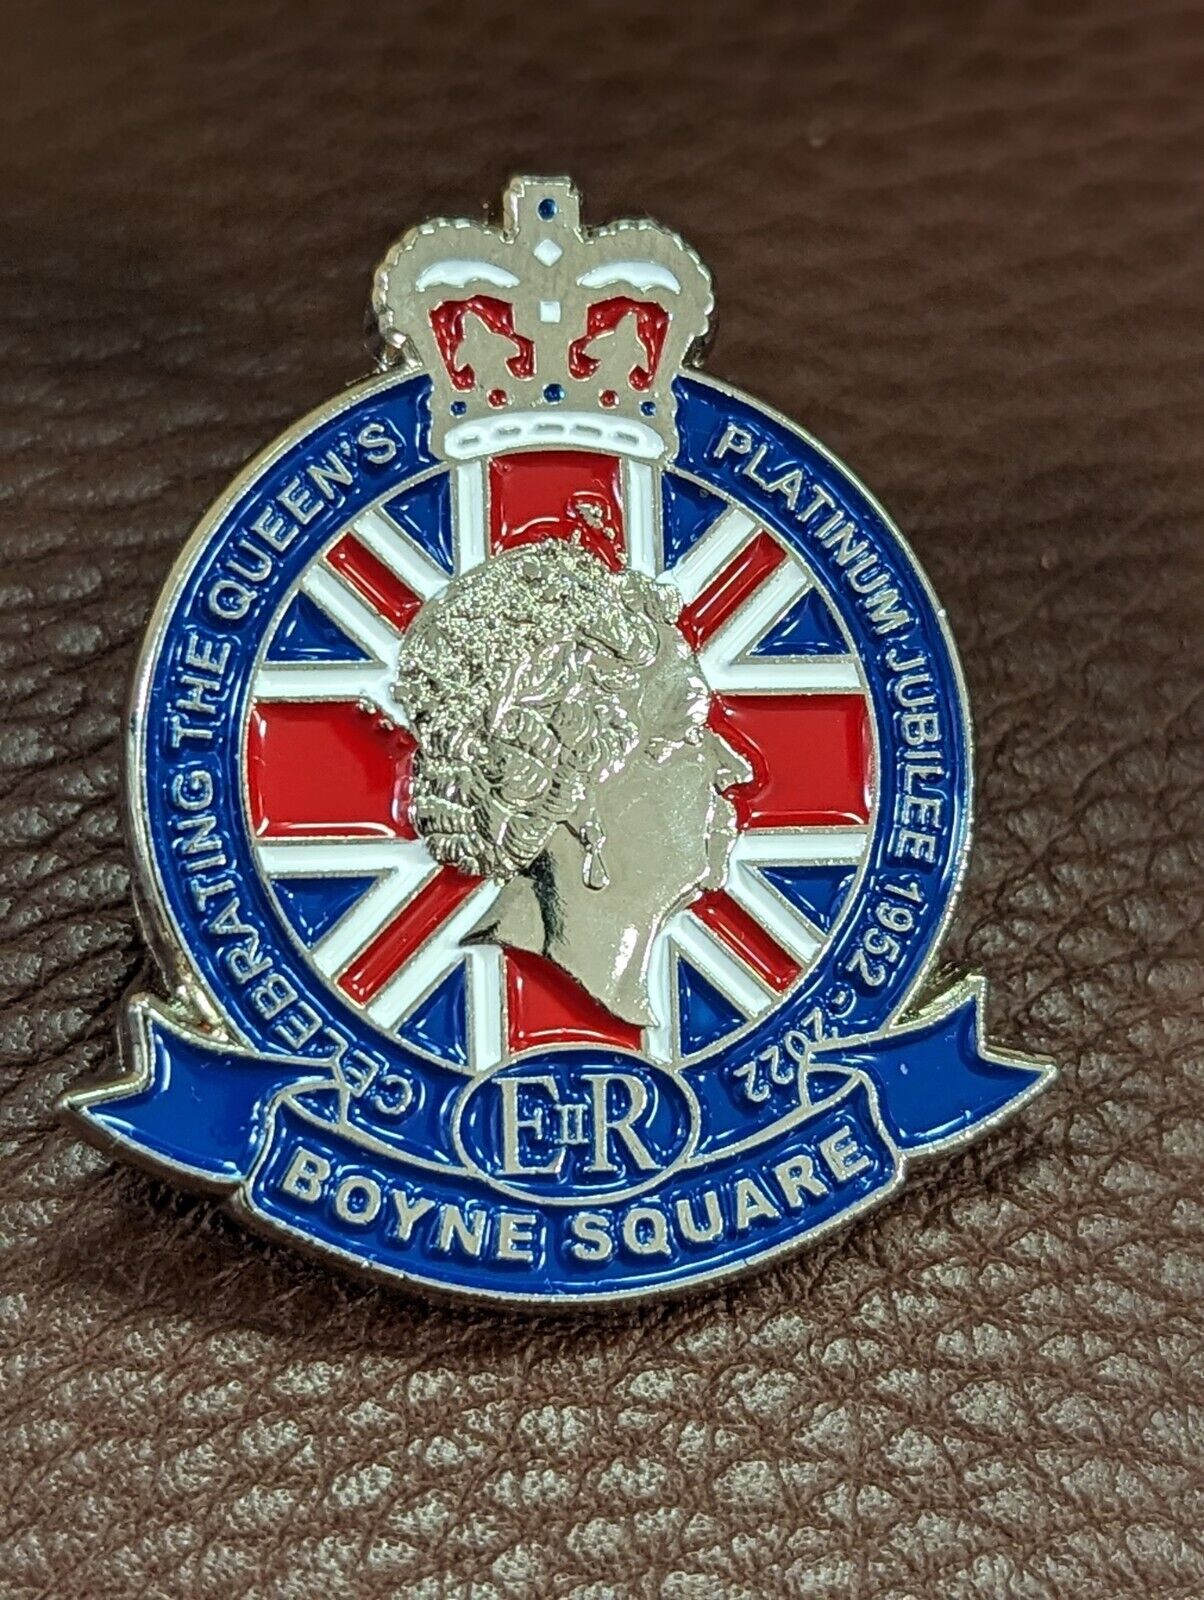 Boyne Square Bonfire Forum 11th July 2022 Orange Order Rare Loyalist Pin Badge